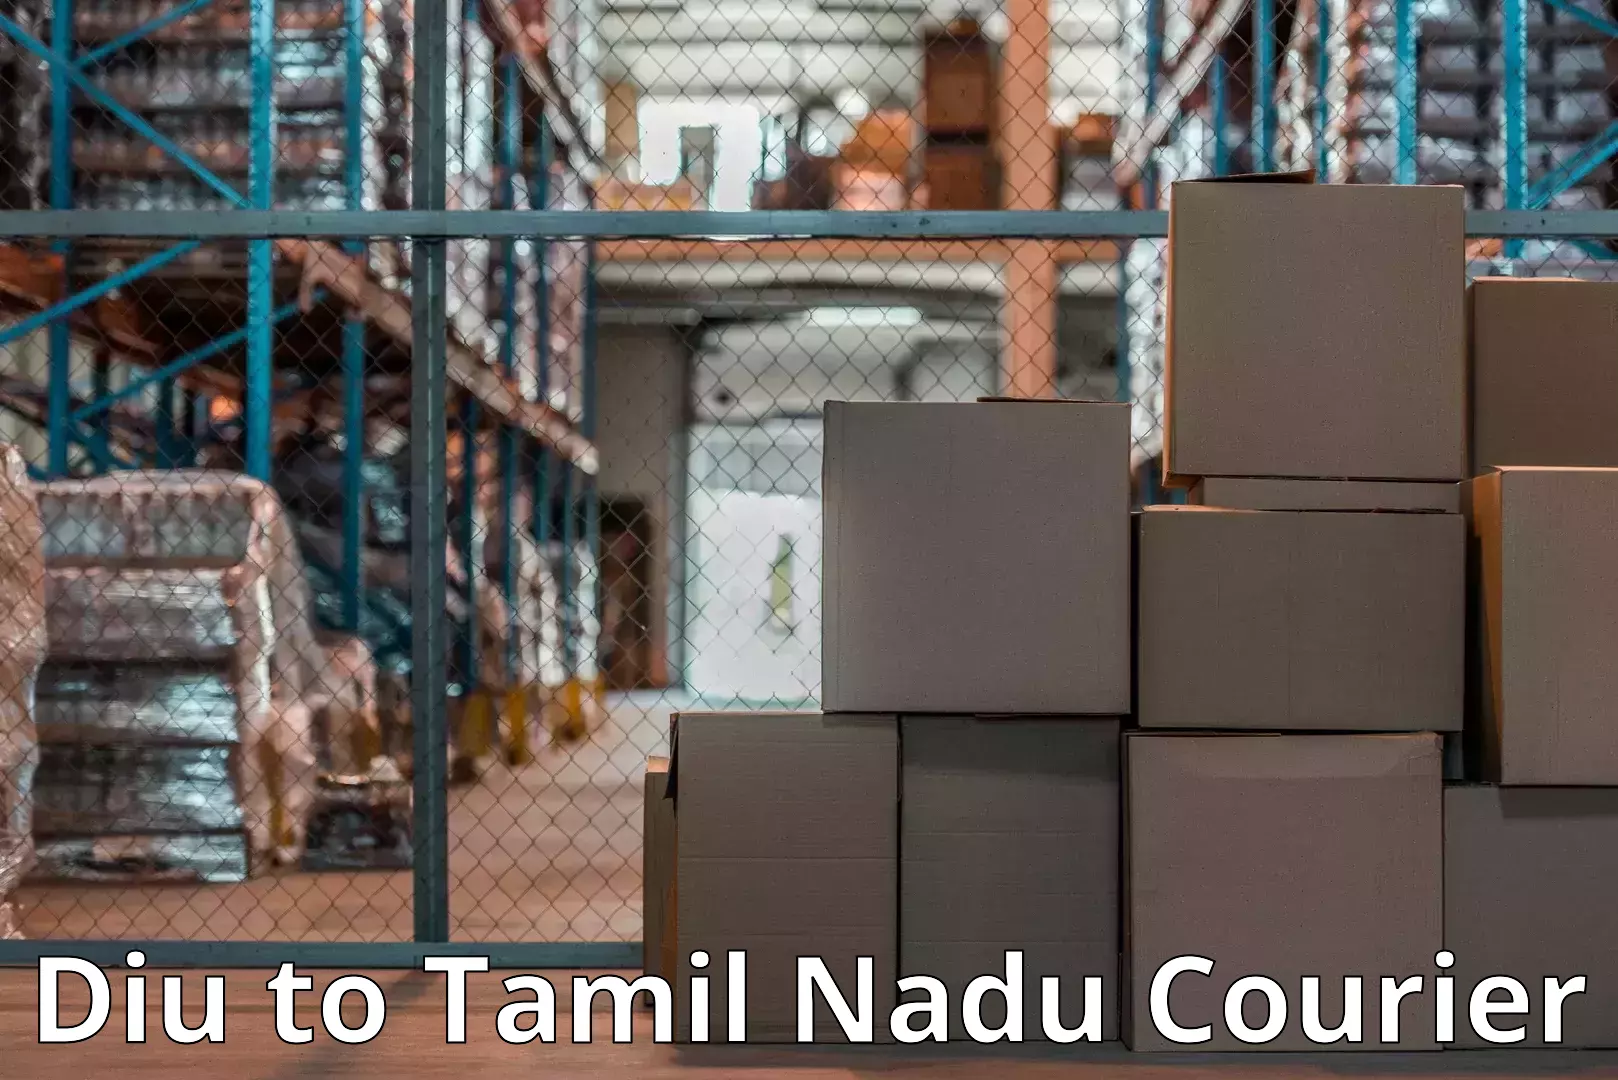 Efficient moving company Diu to Tamil Nadu